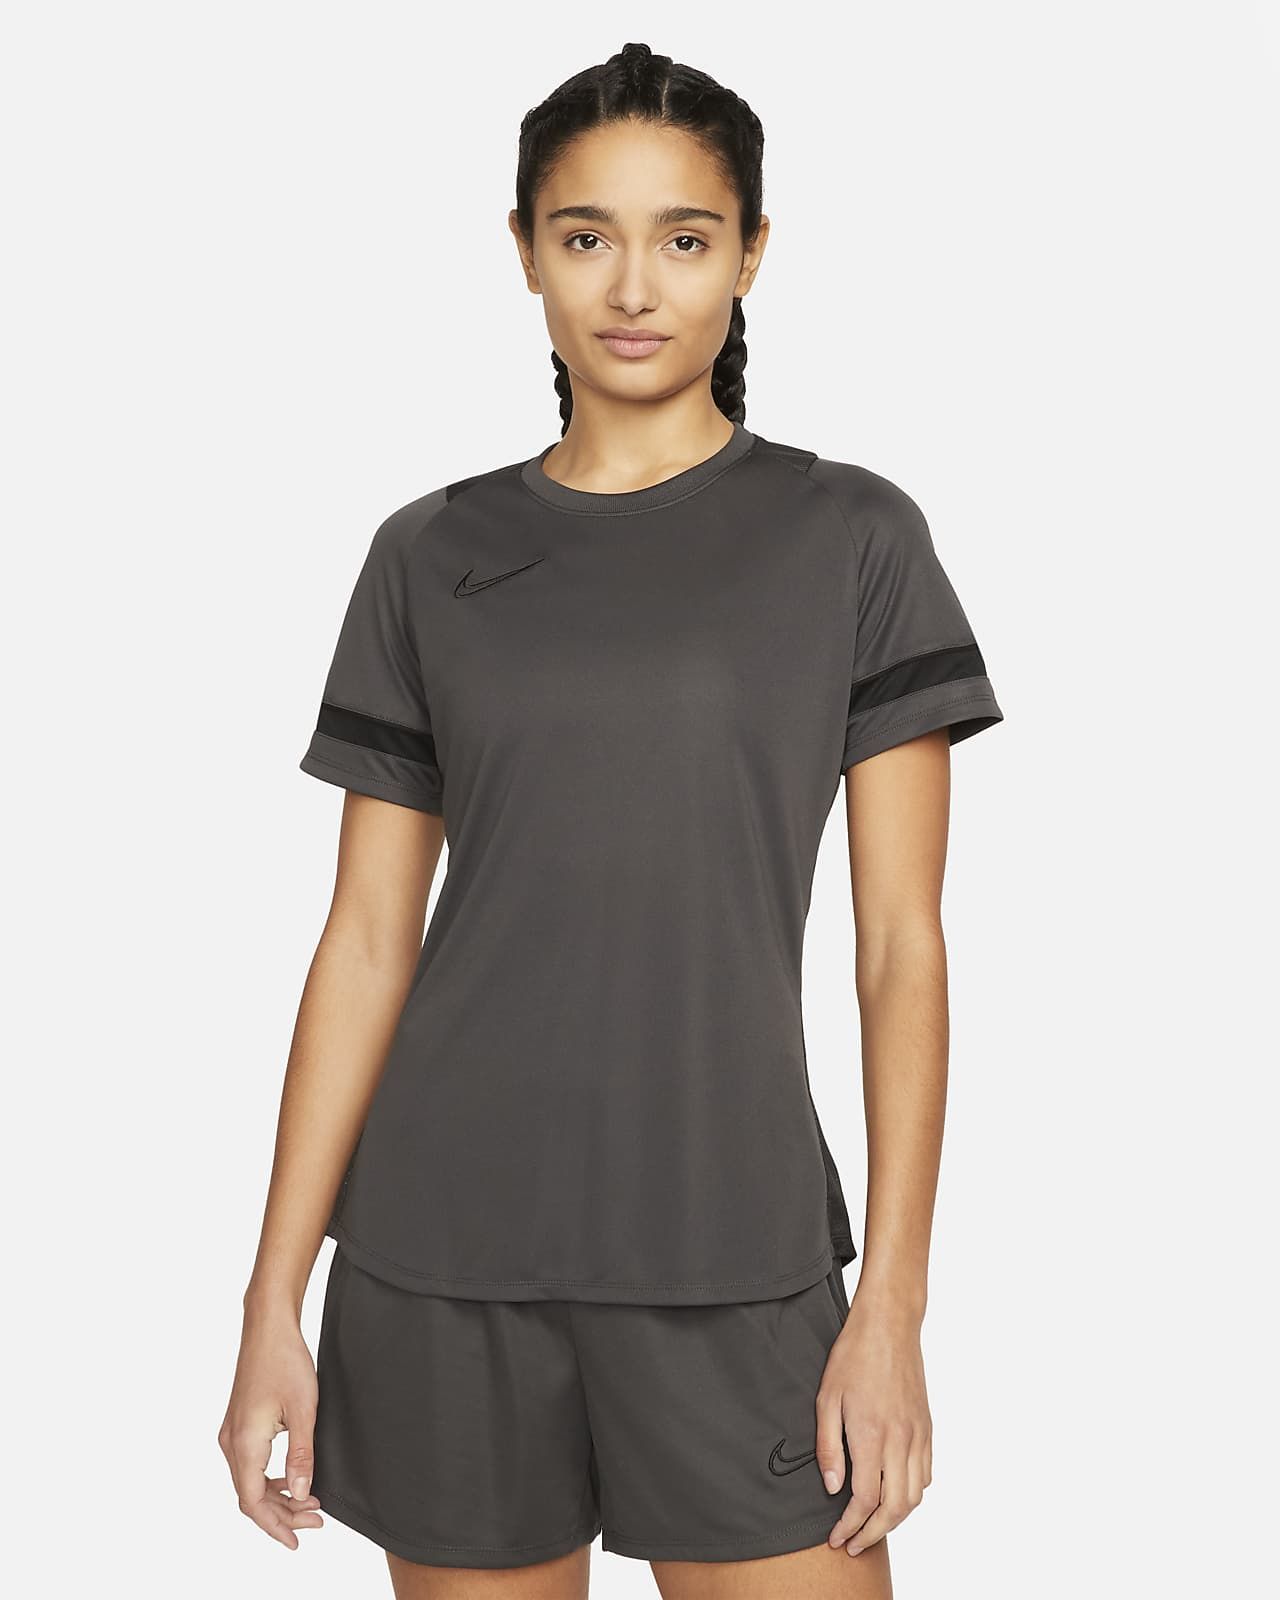 Women's Short-Sleeve Soccer Top | Nike (US)